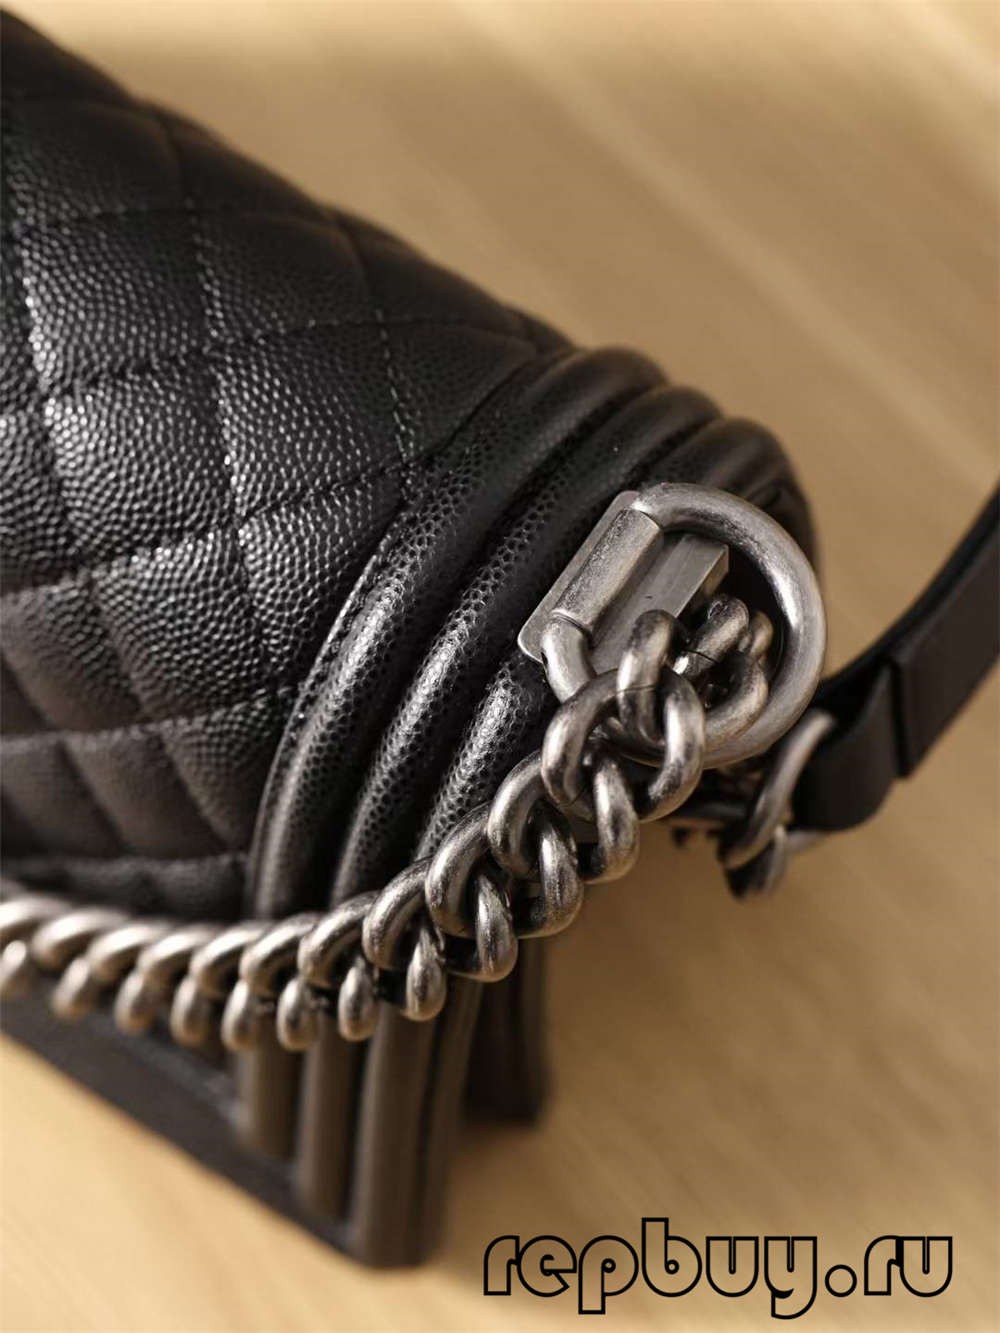 Chanel Leboy Top Replica Handbags Hardware Details (2022 Updated)-Best Quality Fake Louis Vuitton Bag Online Store, Replica designer bag ru